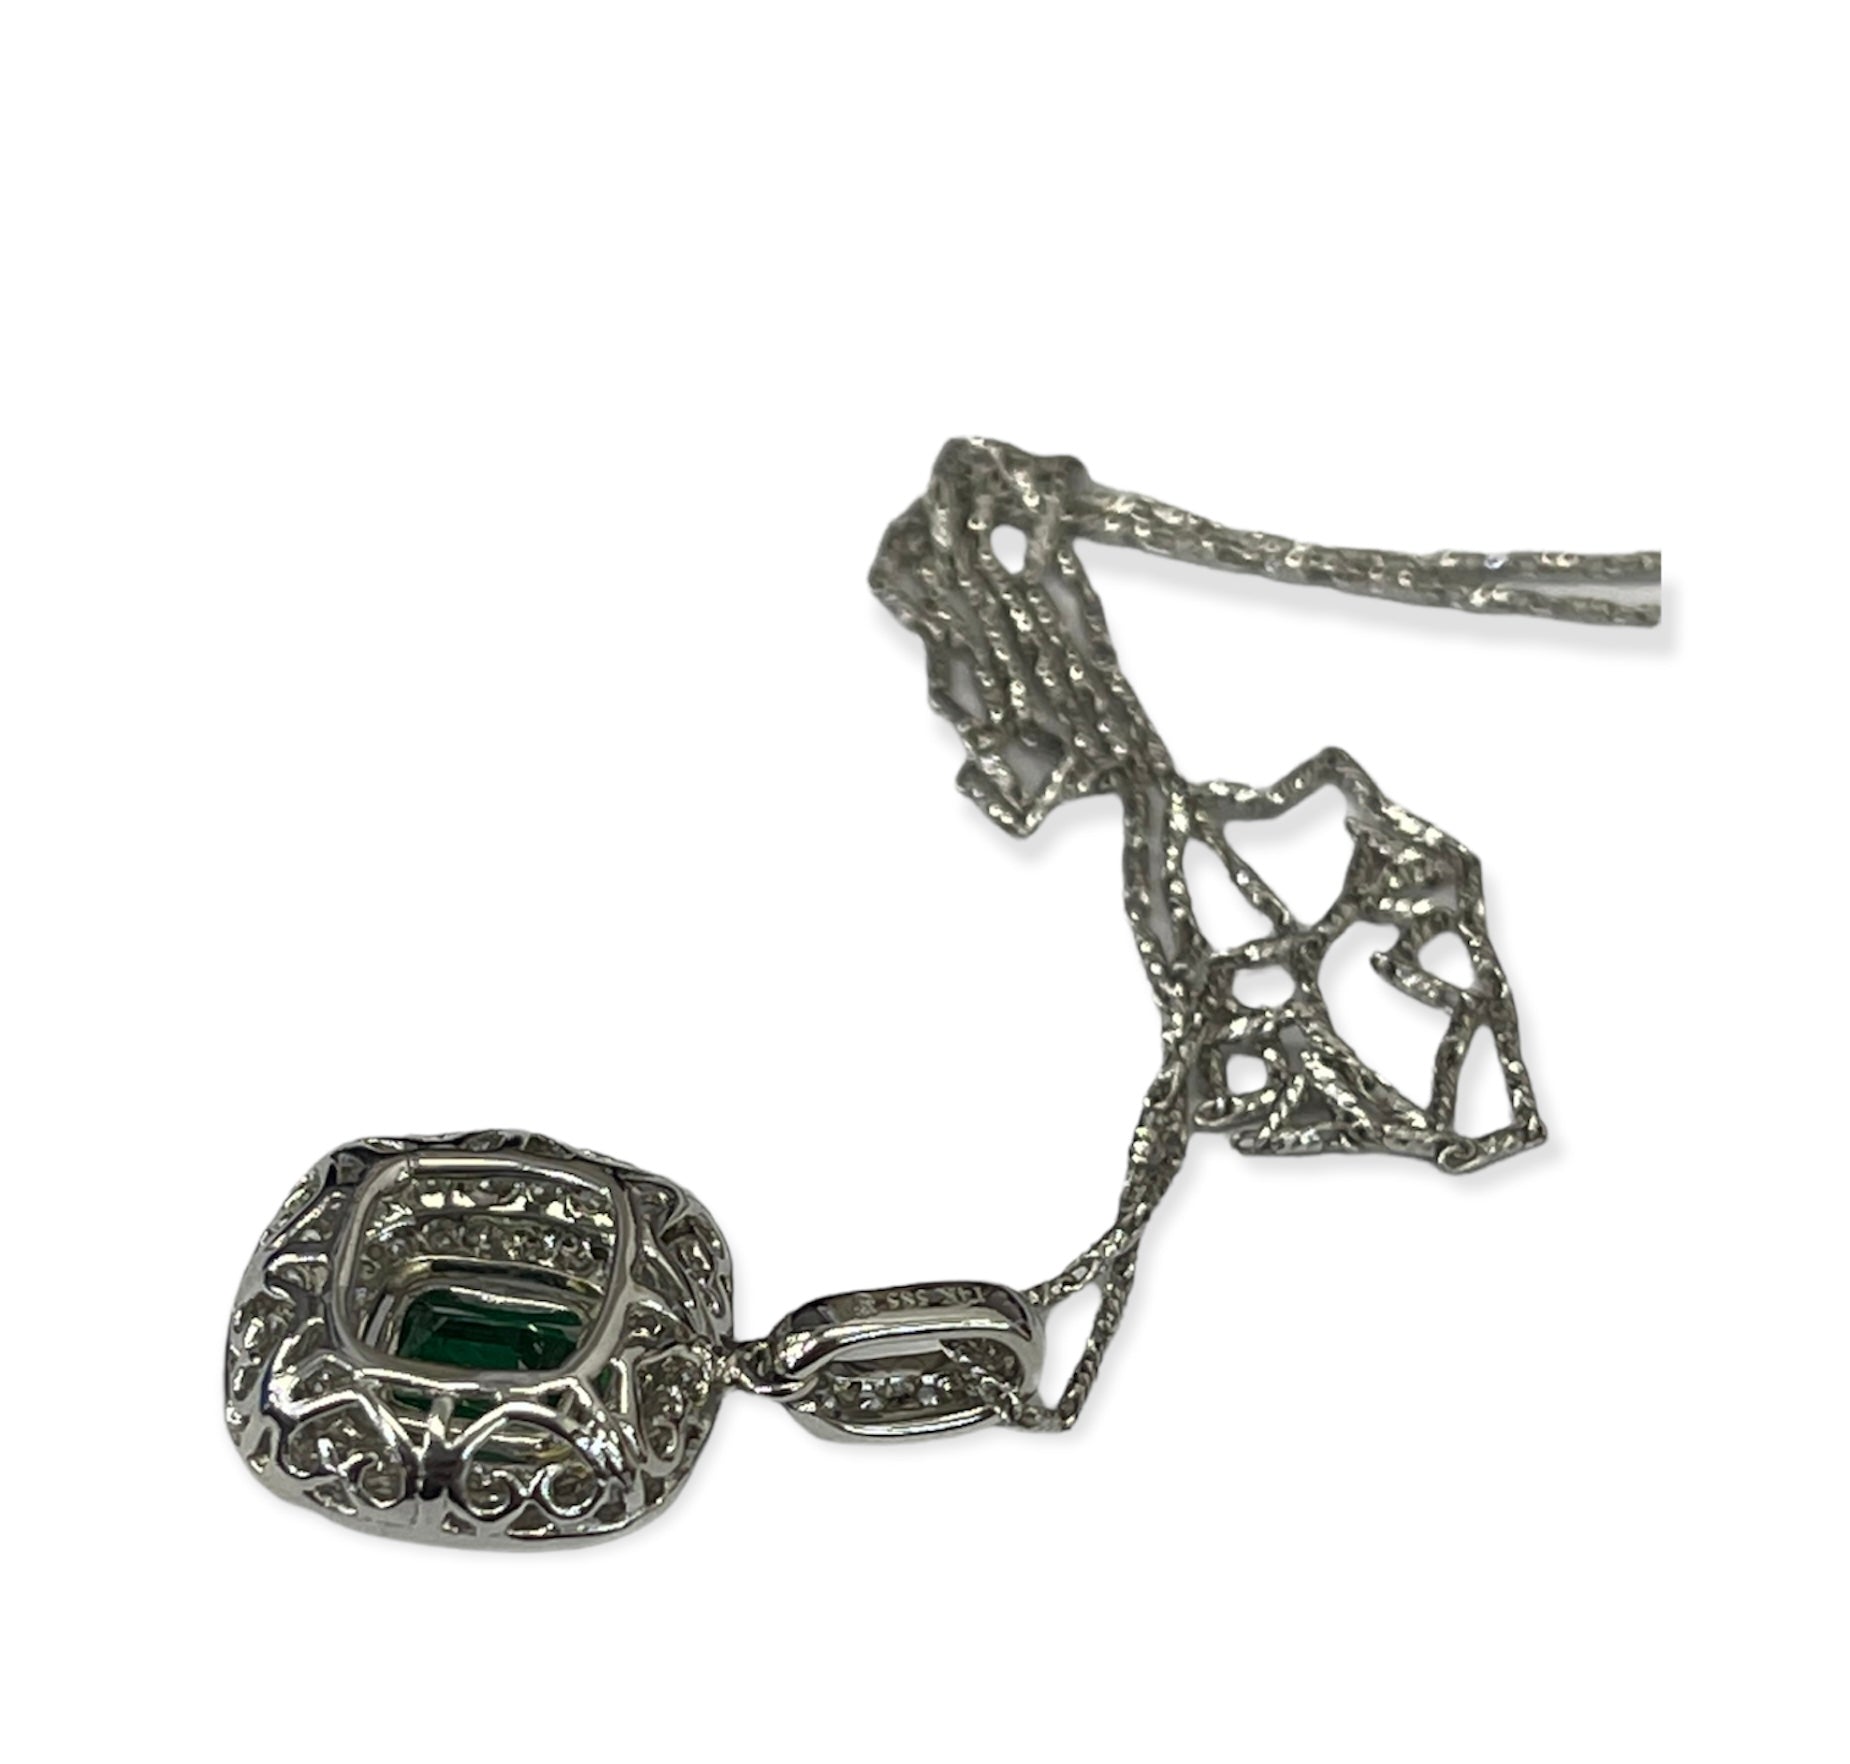 Emerald Gem Double Halo Cushion Diamond Pendant with Chain 14kt